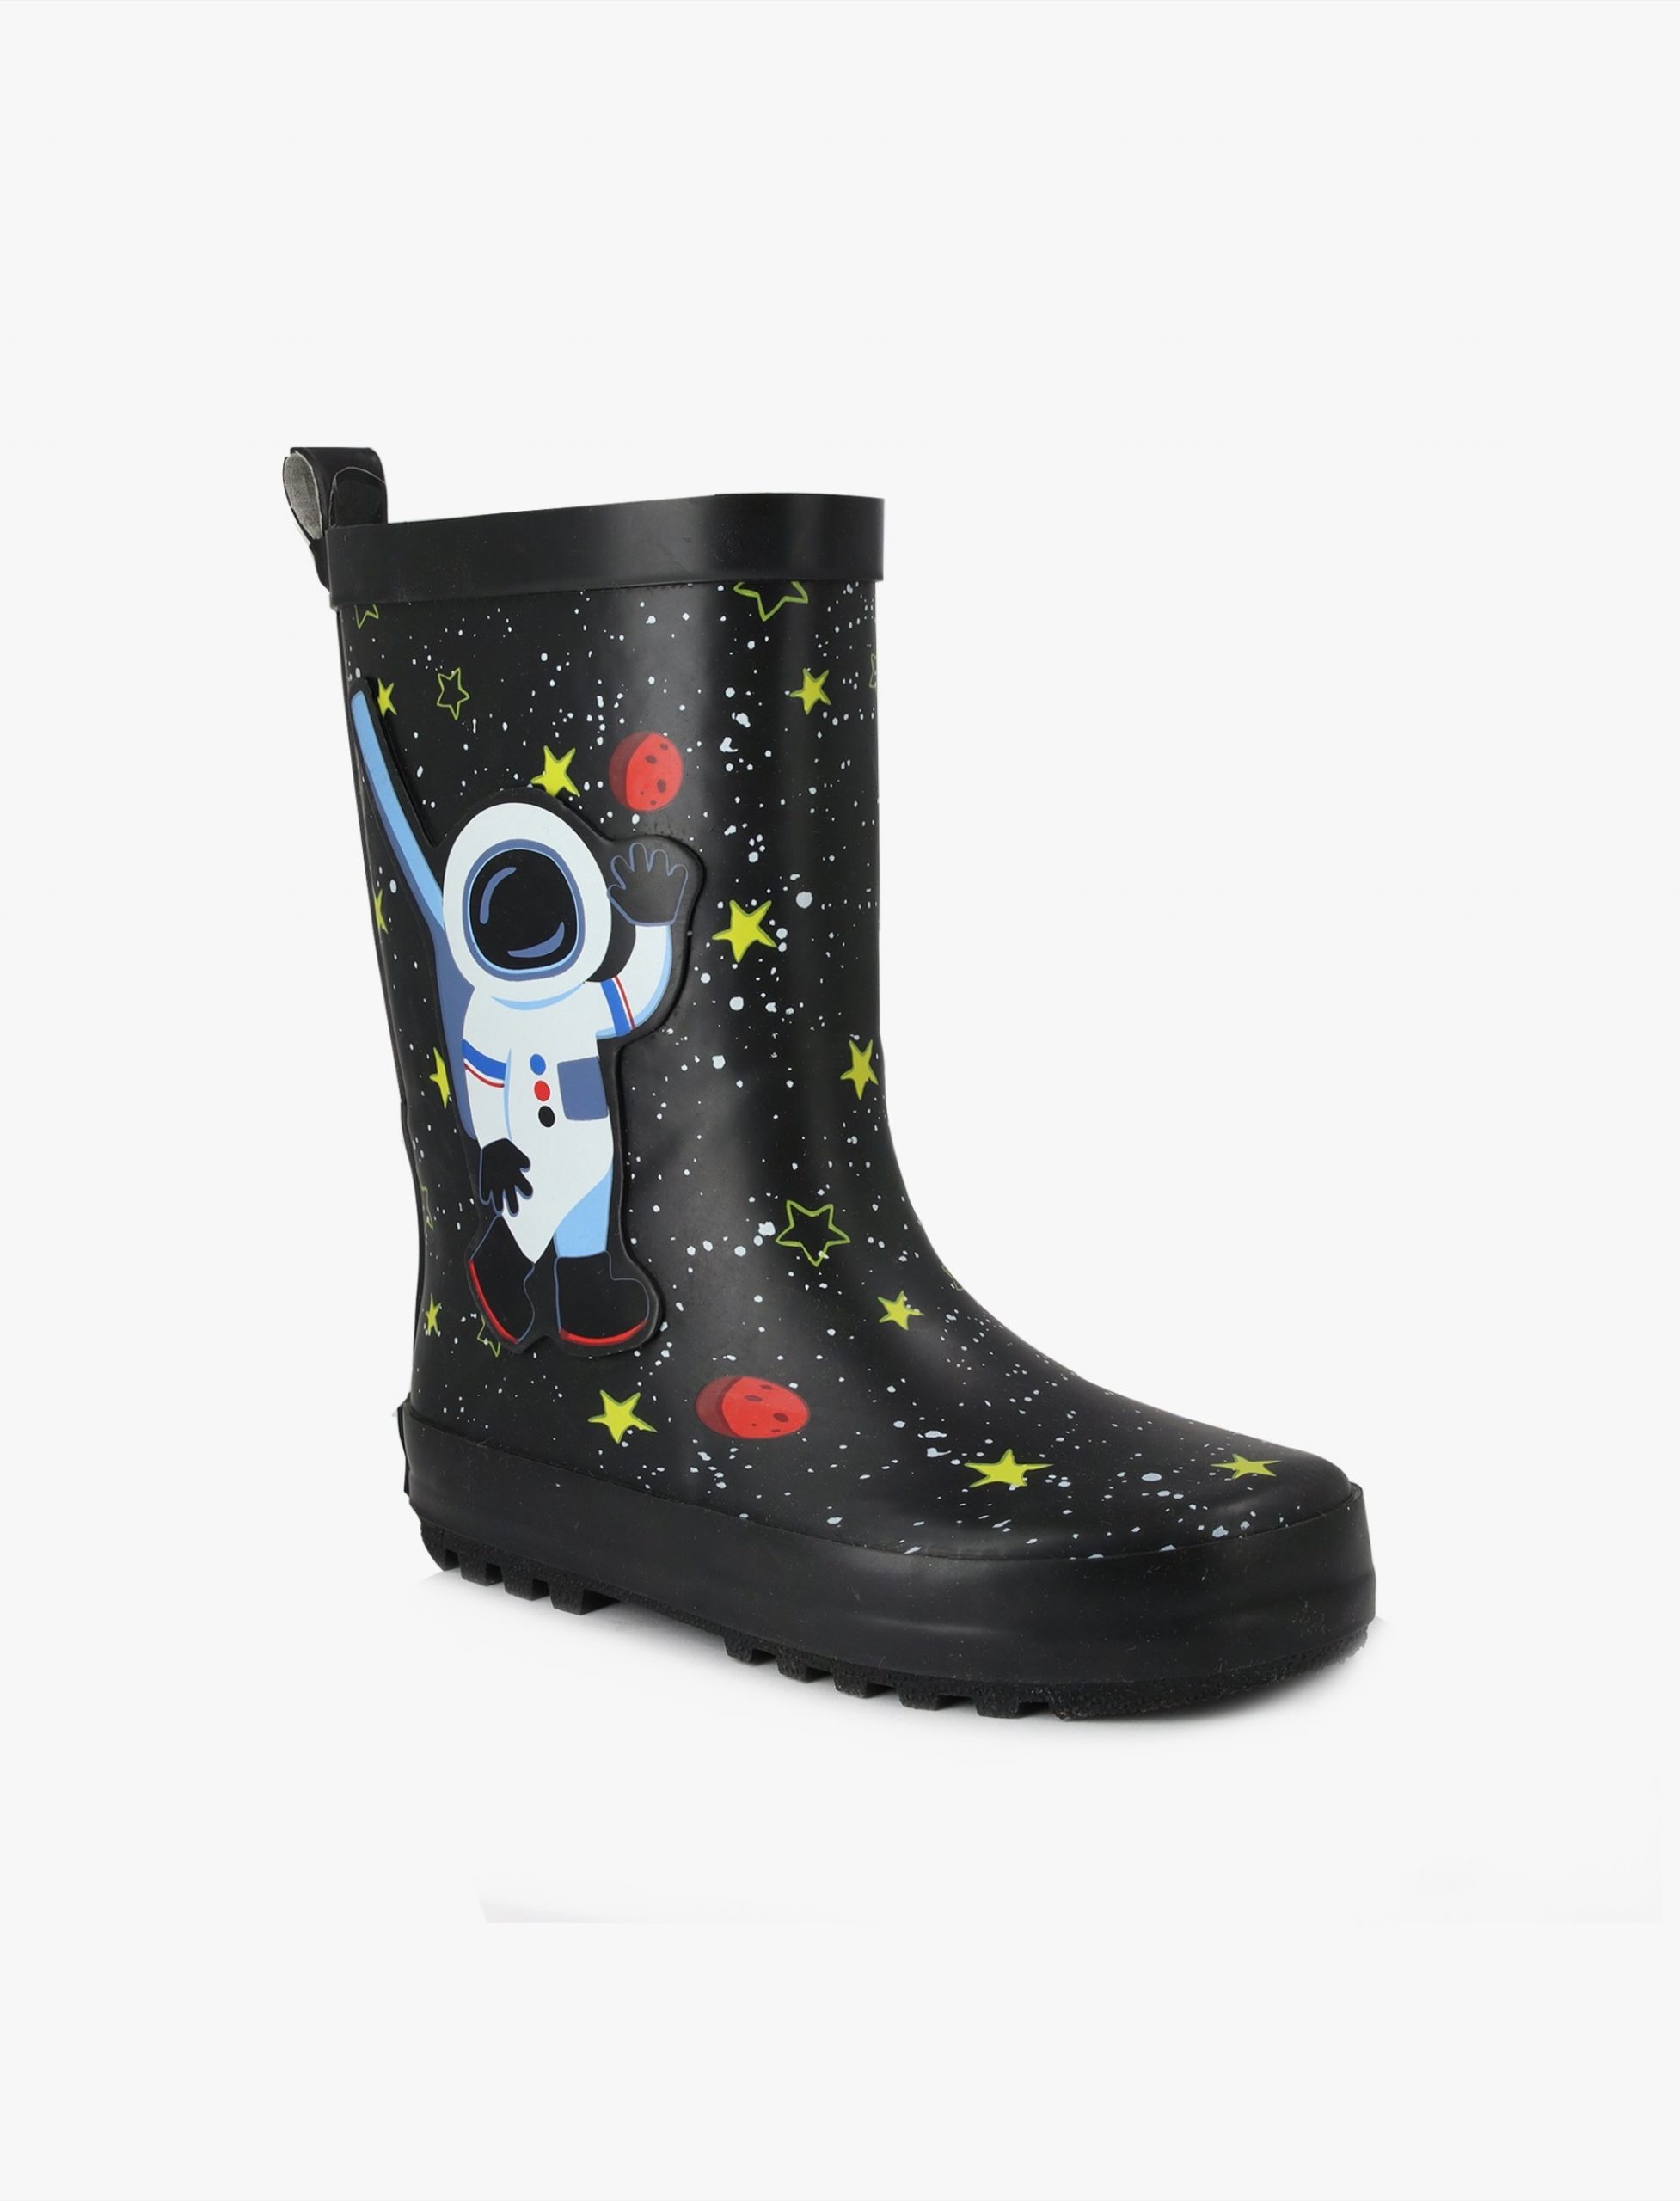 Magma Rain Boot מגפי גומי מגמה לילדים בהדפס אסטרונאוט בצבע שחור ברשת ווישוז מחיר 99 שח צילום עמירם בן ישי